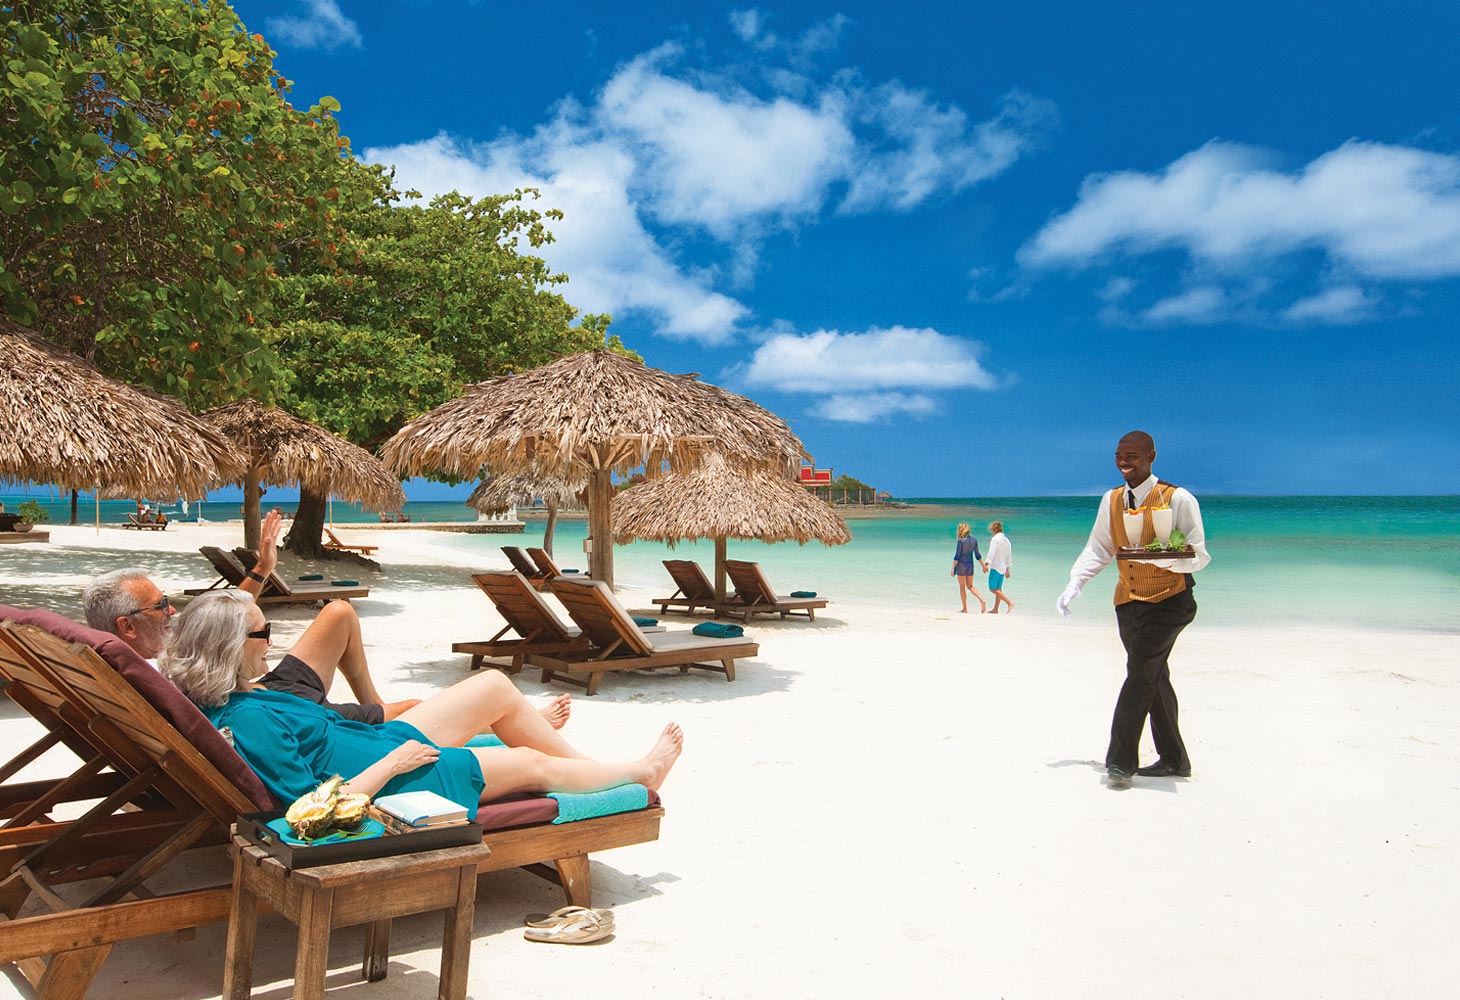 Sandals Royal Caribbean Resort & Private Island. 